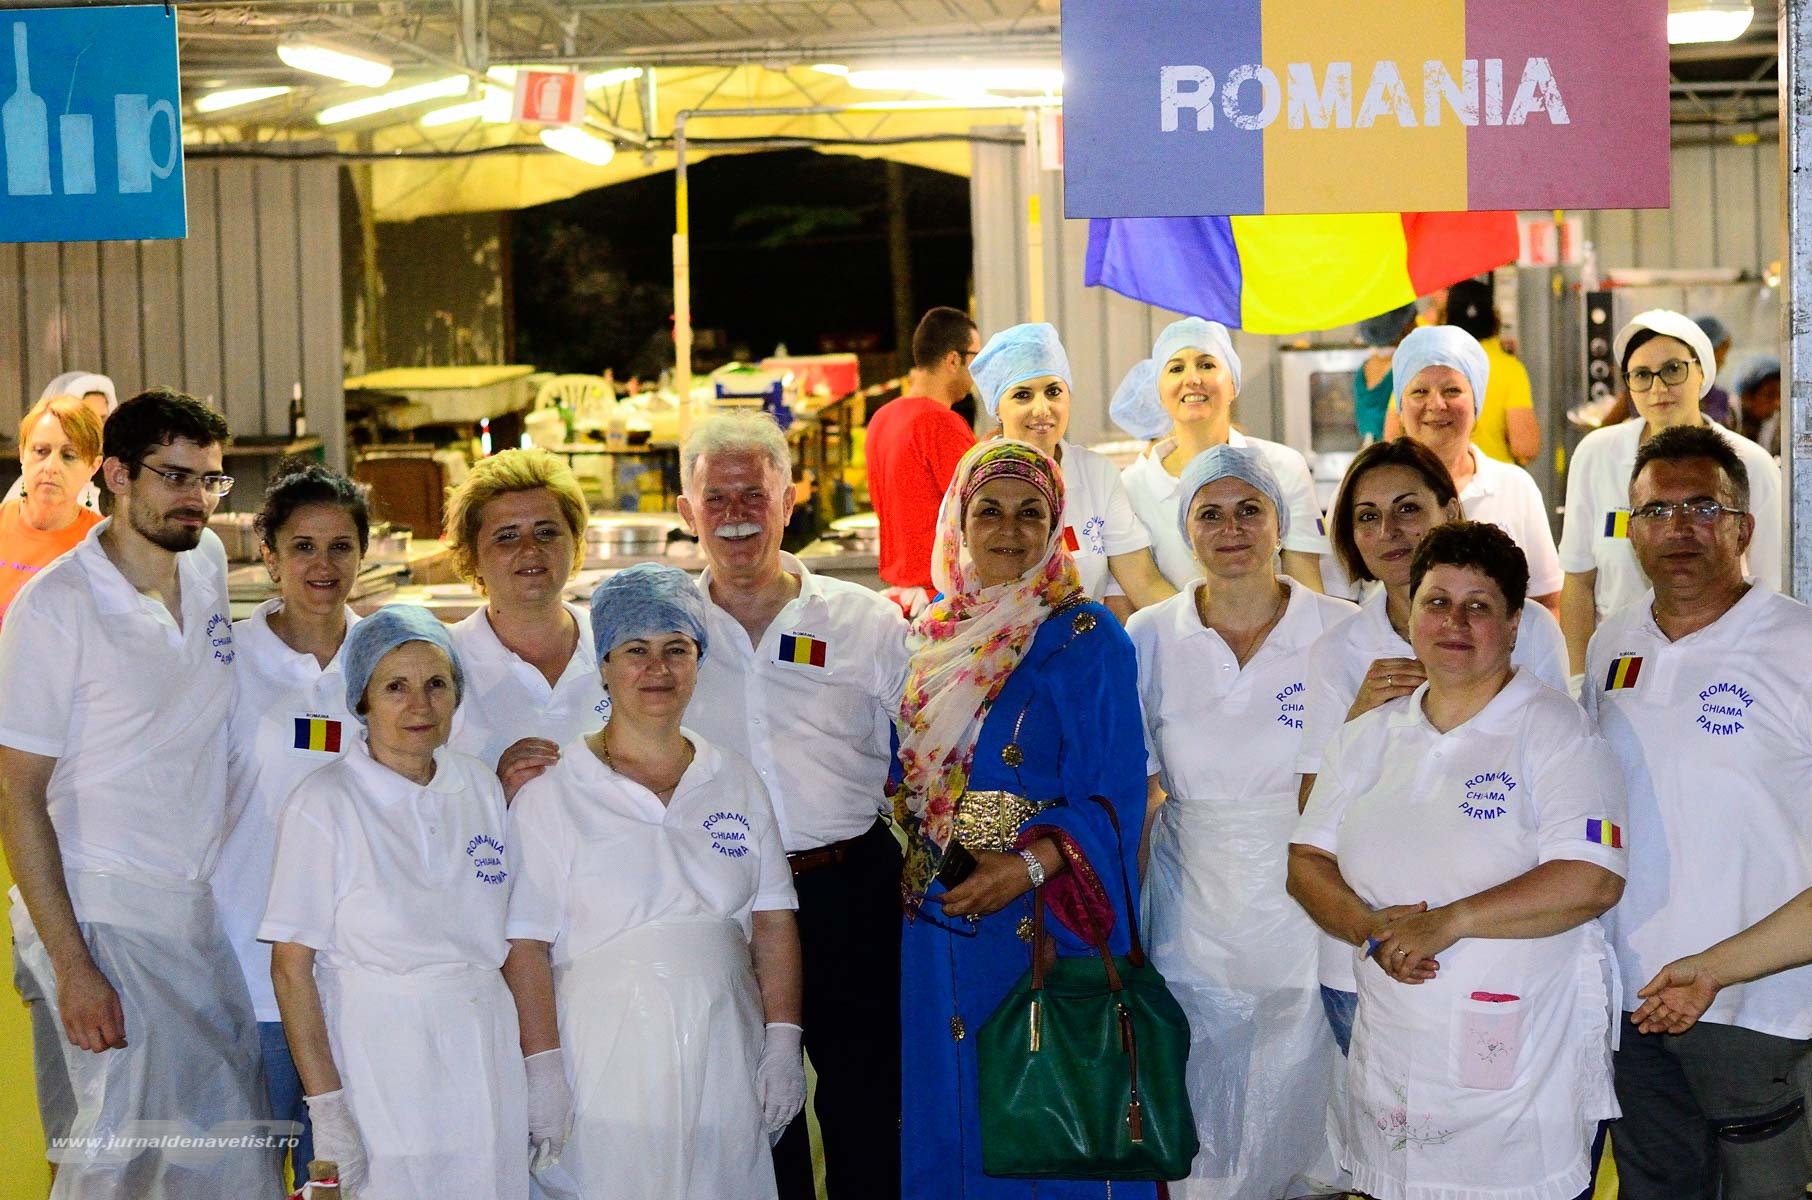 Romania Chiama Parma 7681